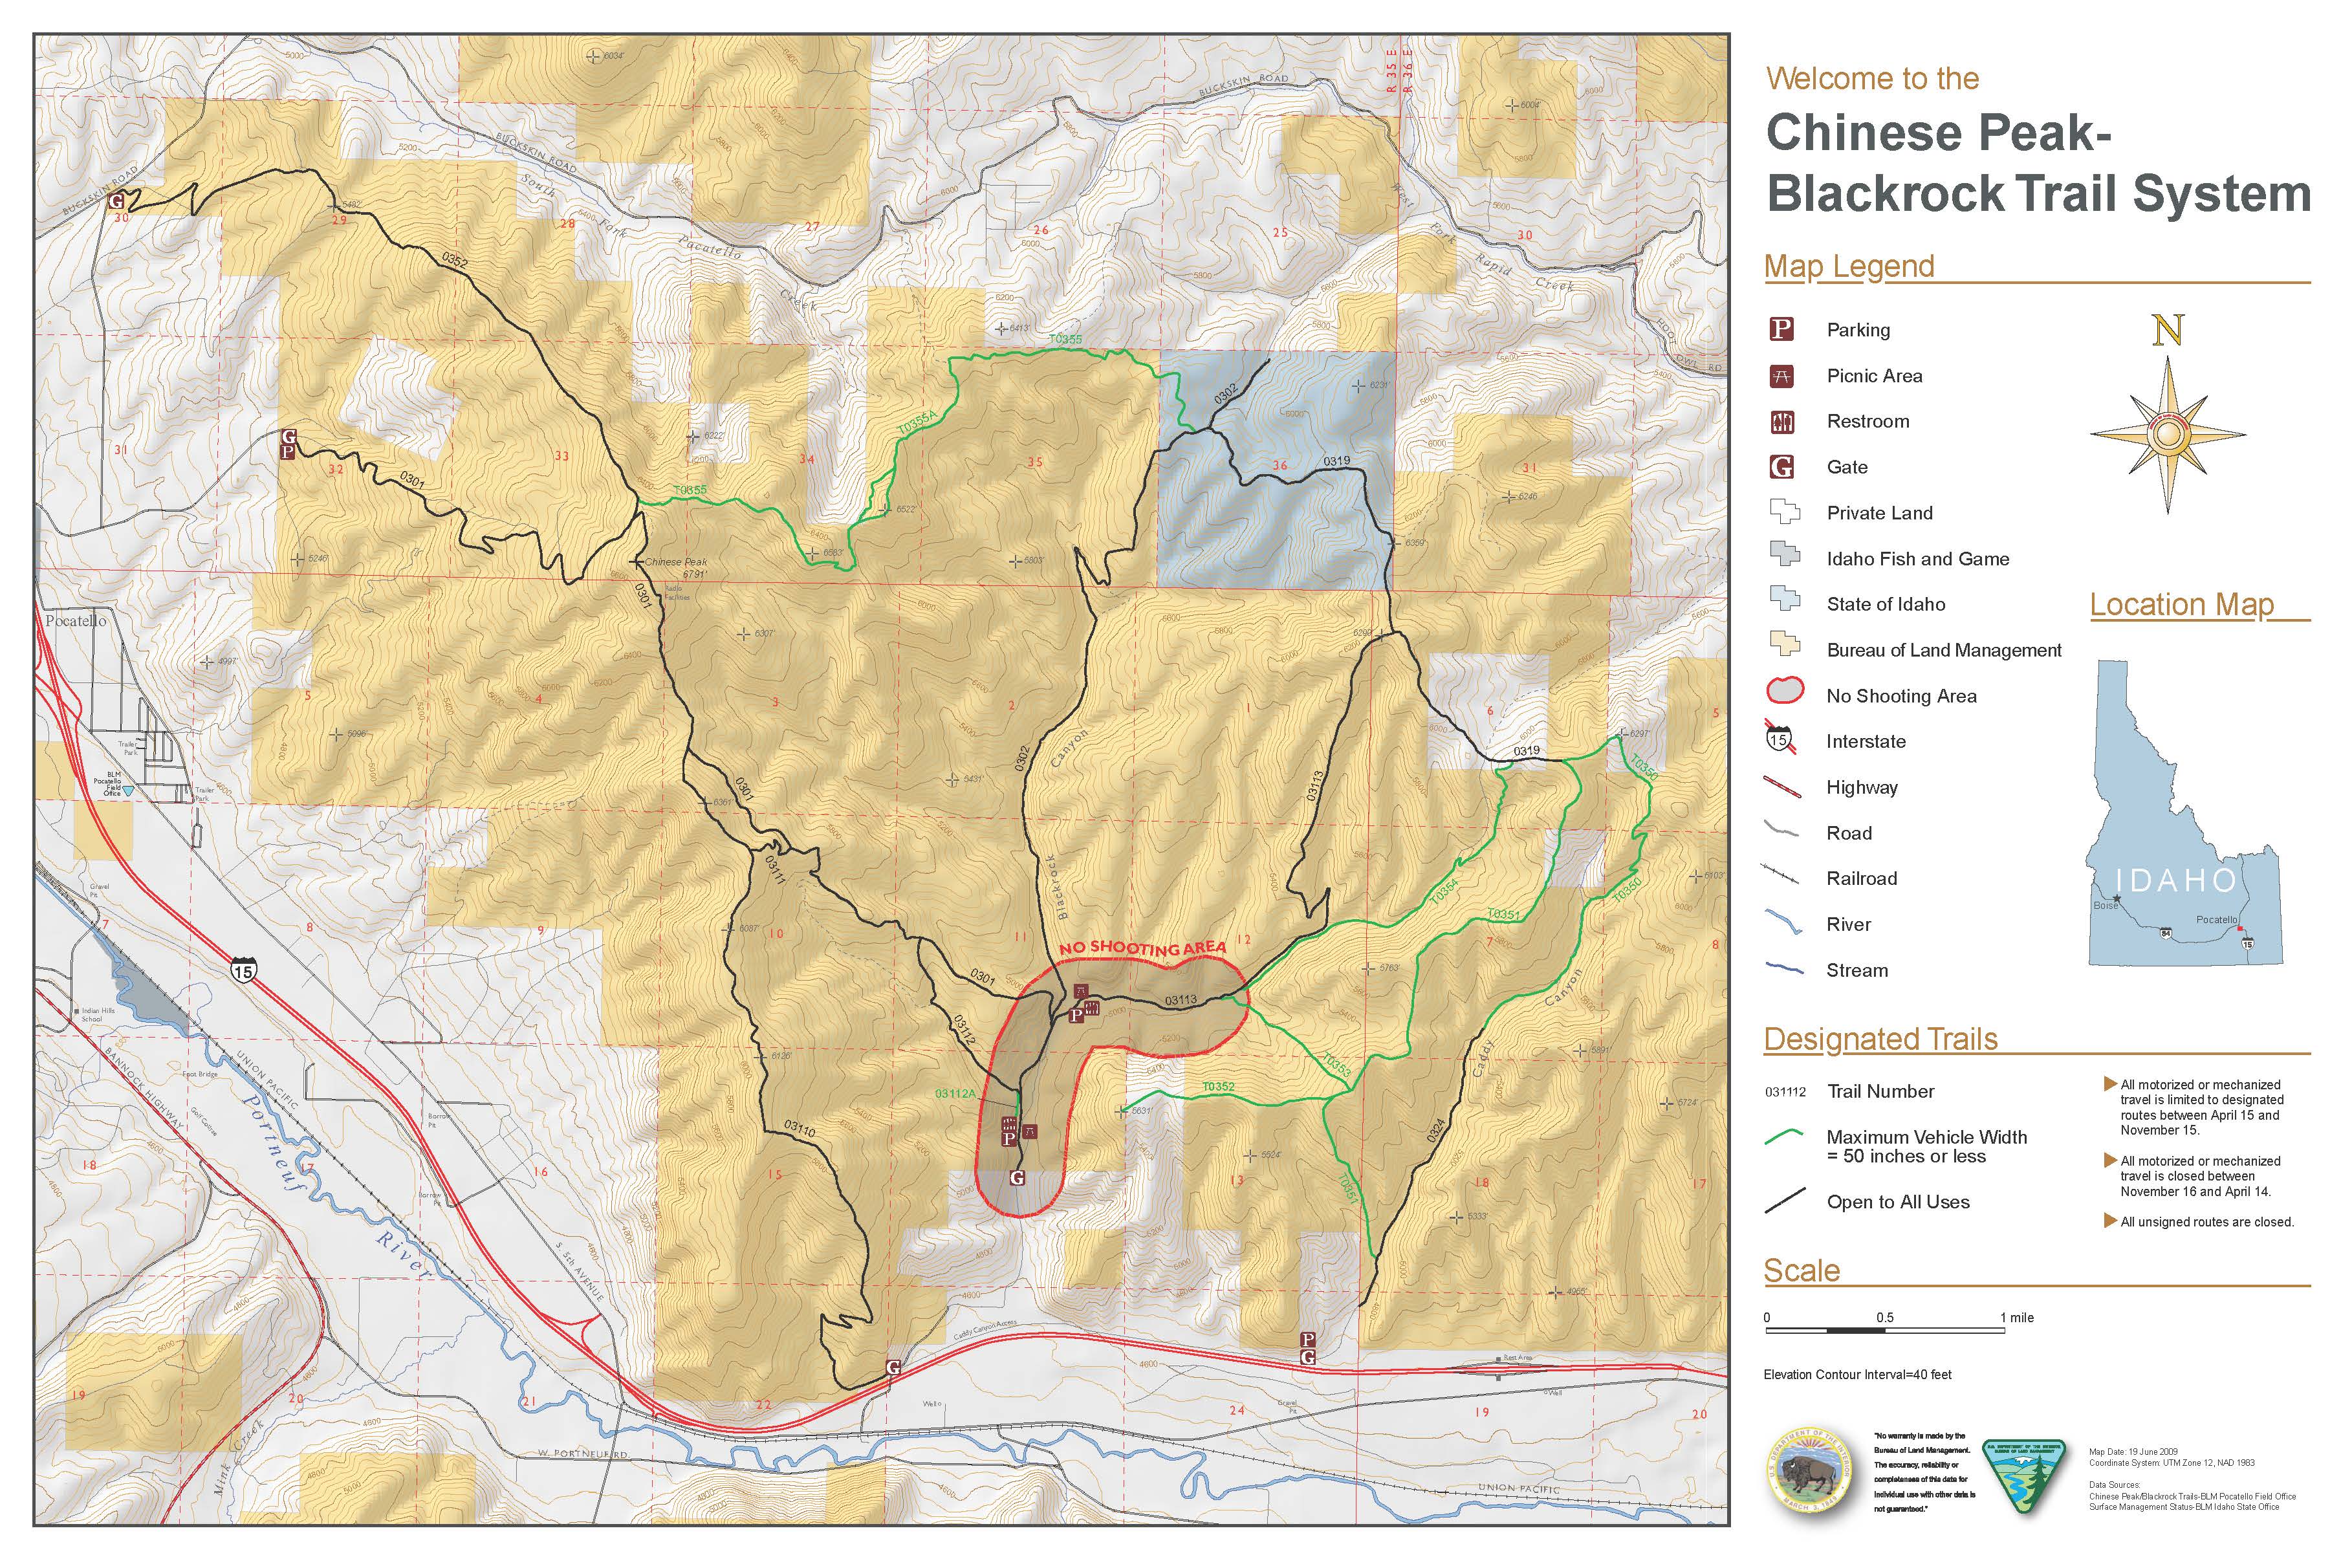 Media Center Public Room Idaho Chinese Peak Blackrock Trail System Georeferenced Travel Map 8167